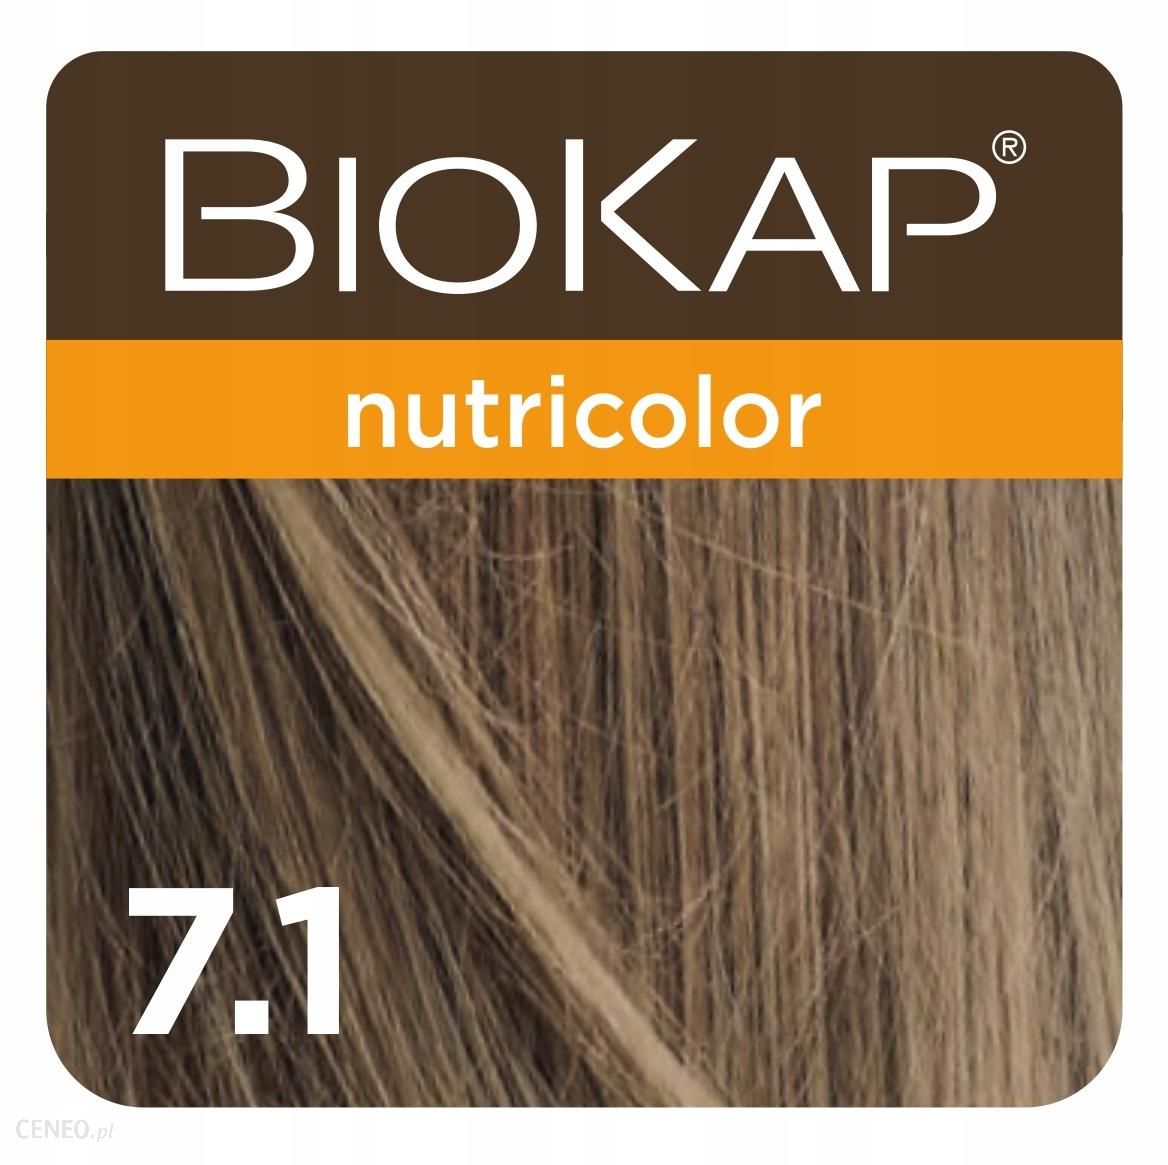 BIOKAP Nutricolor farba koloryzująca 7.1 szwedzki blond 140ml